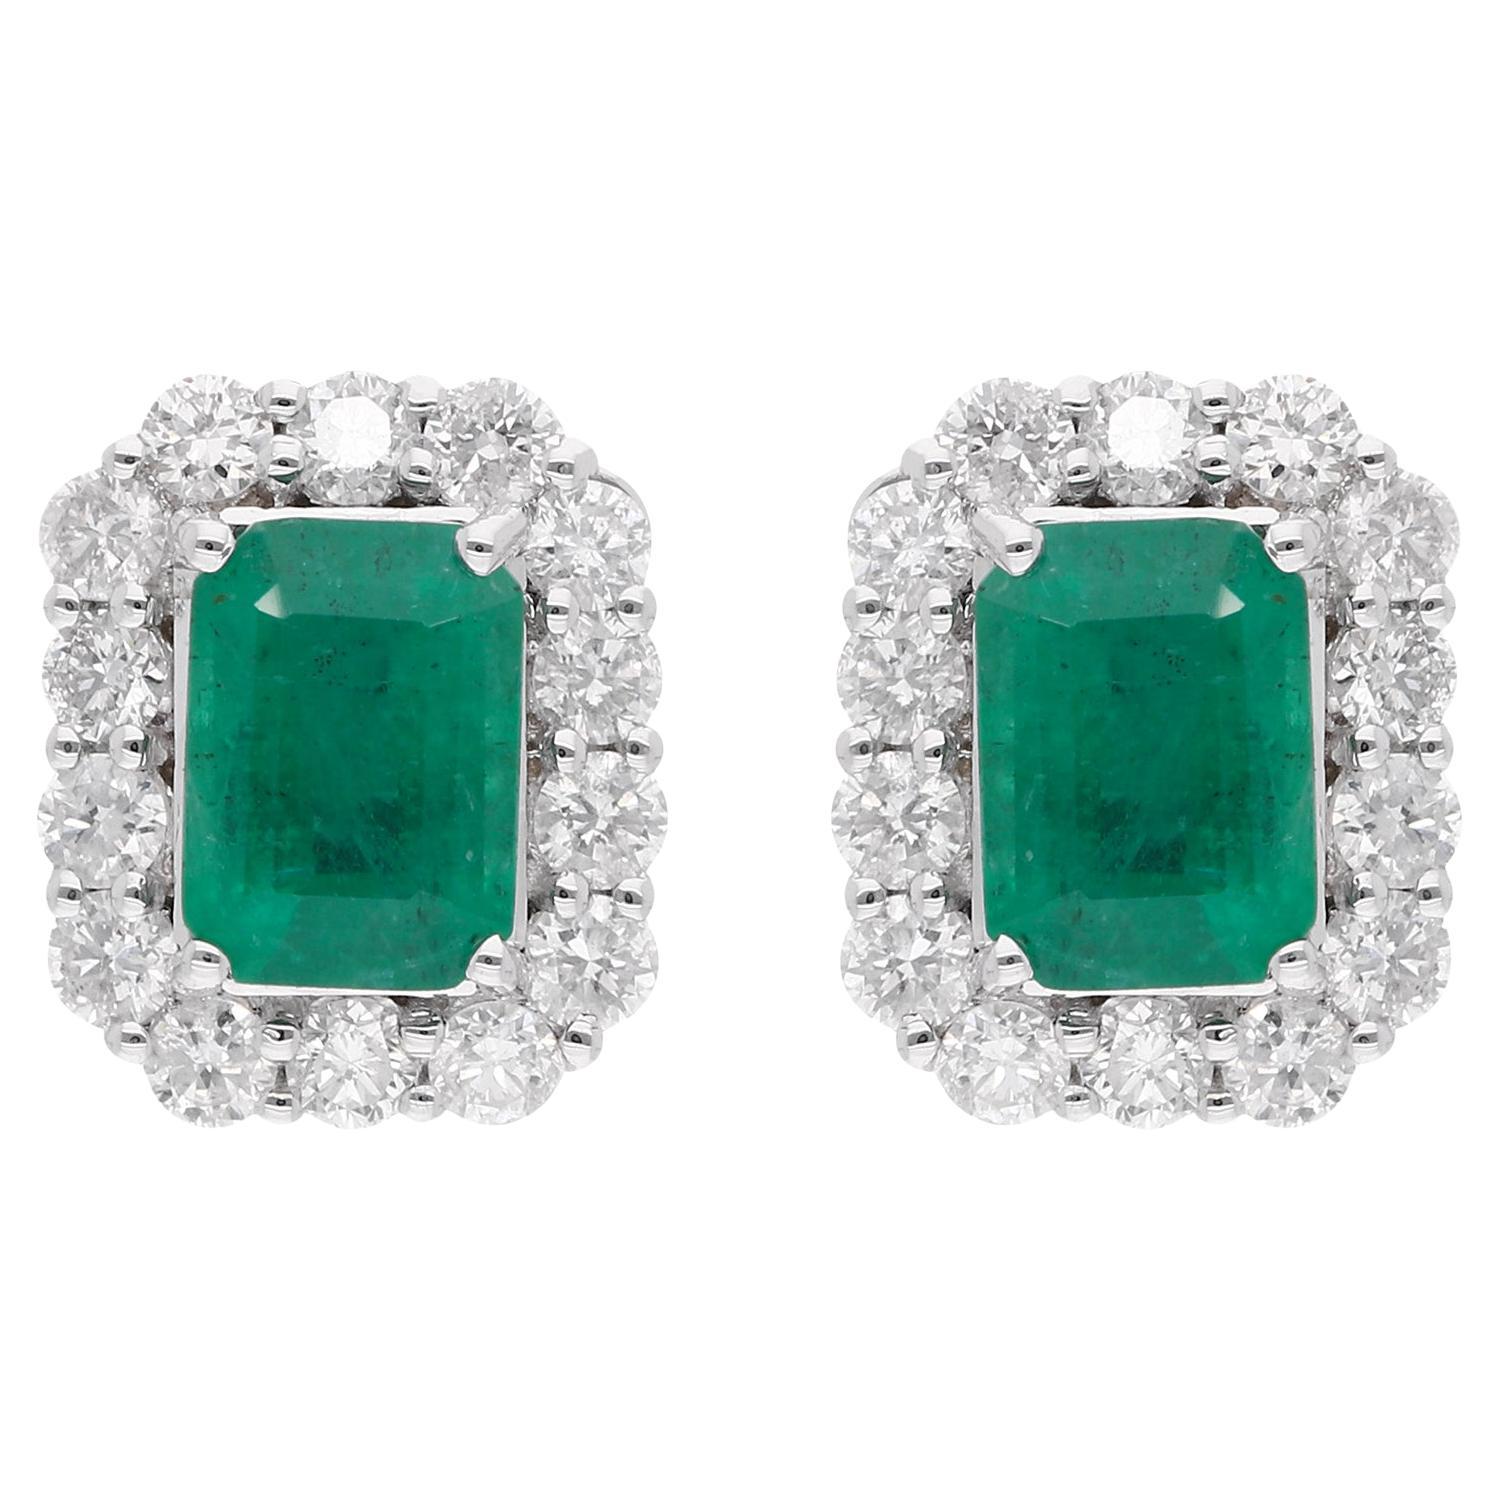 Zambian Emerald Gemstone Stud Earrings Diamond Pave 18 Karat White Gold Jewelry For Sale